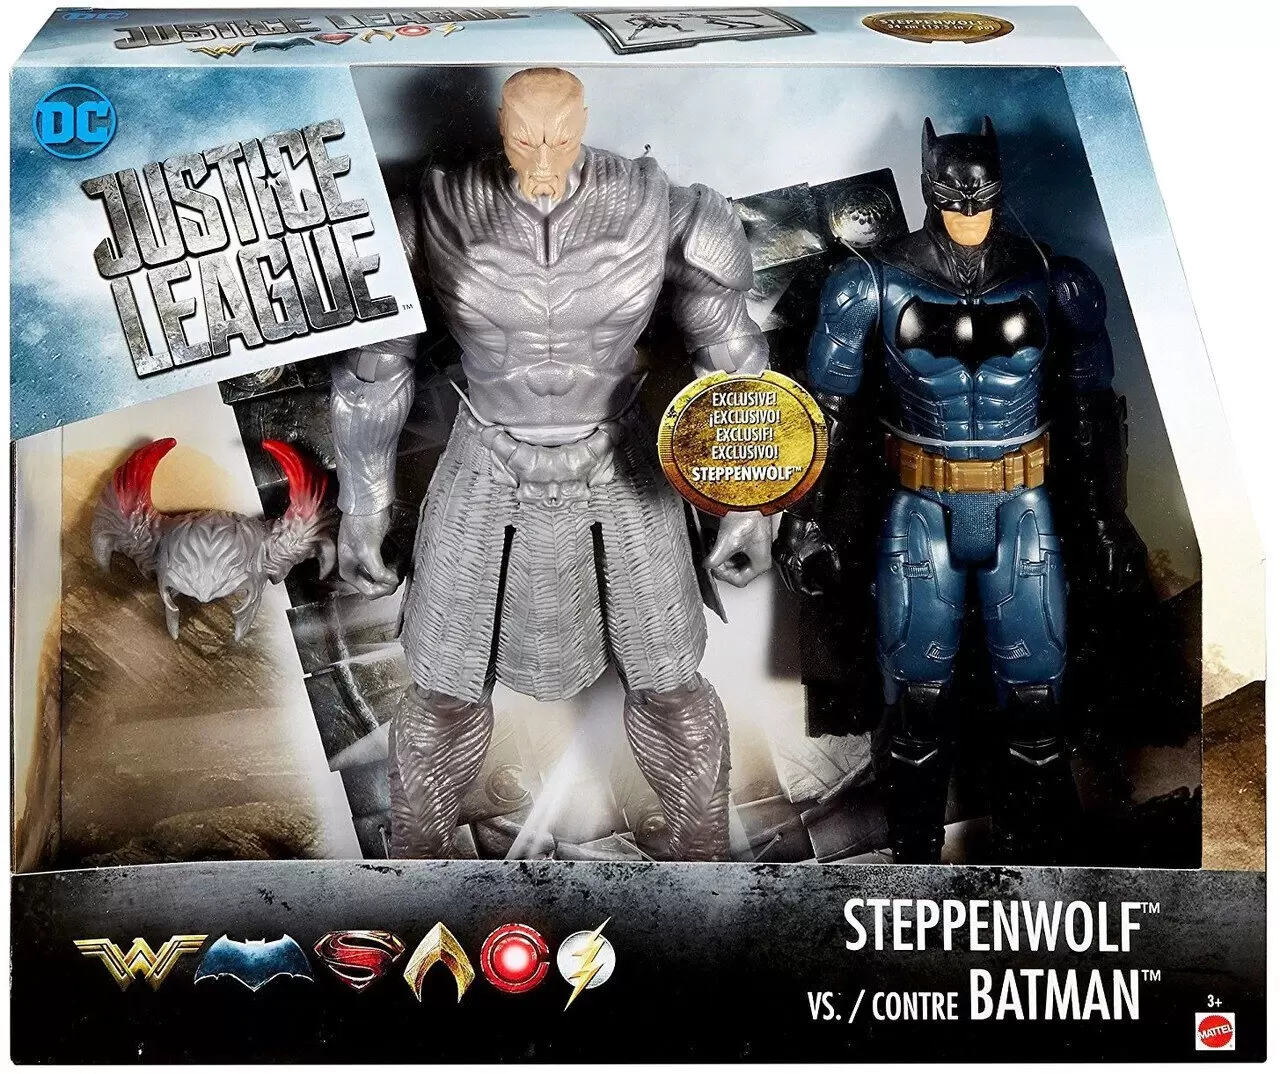 DC Justice League Movie - Steppenwolf vs. Contre Batman [True Moves]